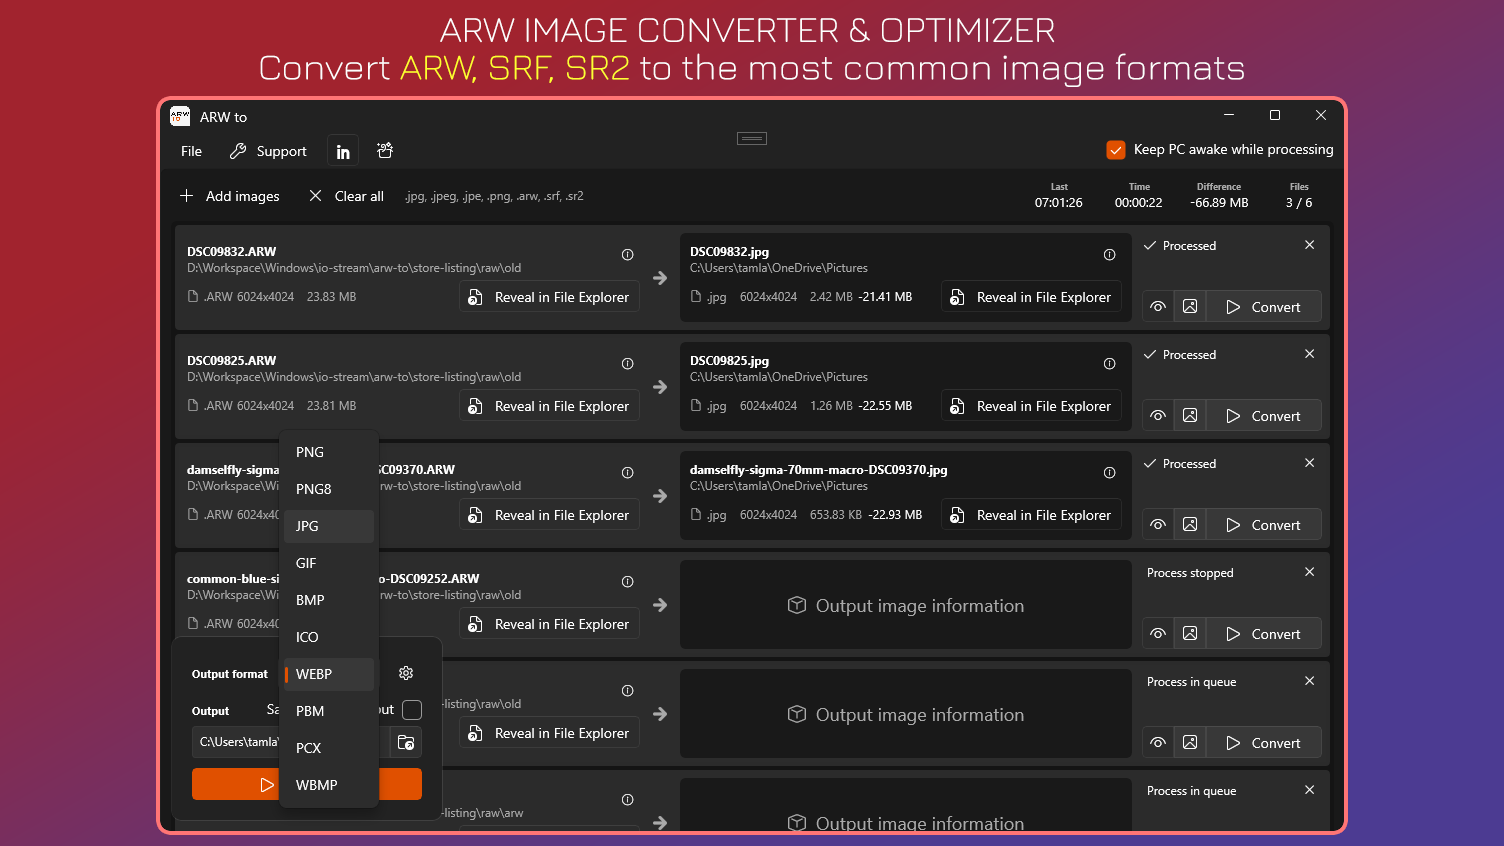 ARW Image Converter & Optimizer - Convert ARW, SRF, SR2 to the most common image formats.